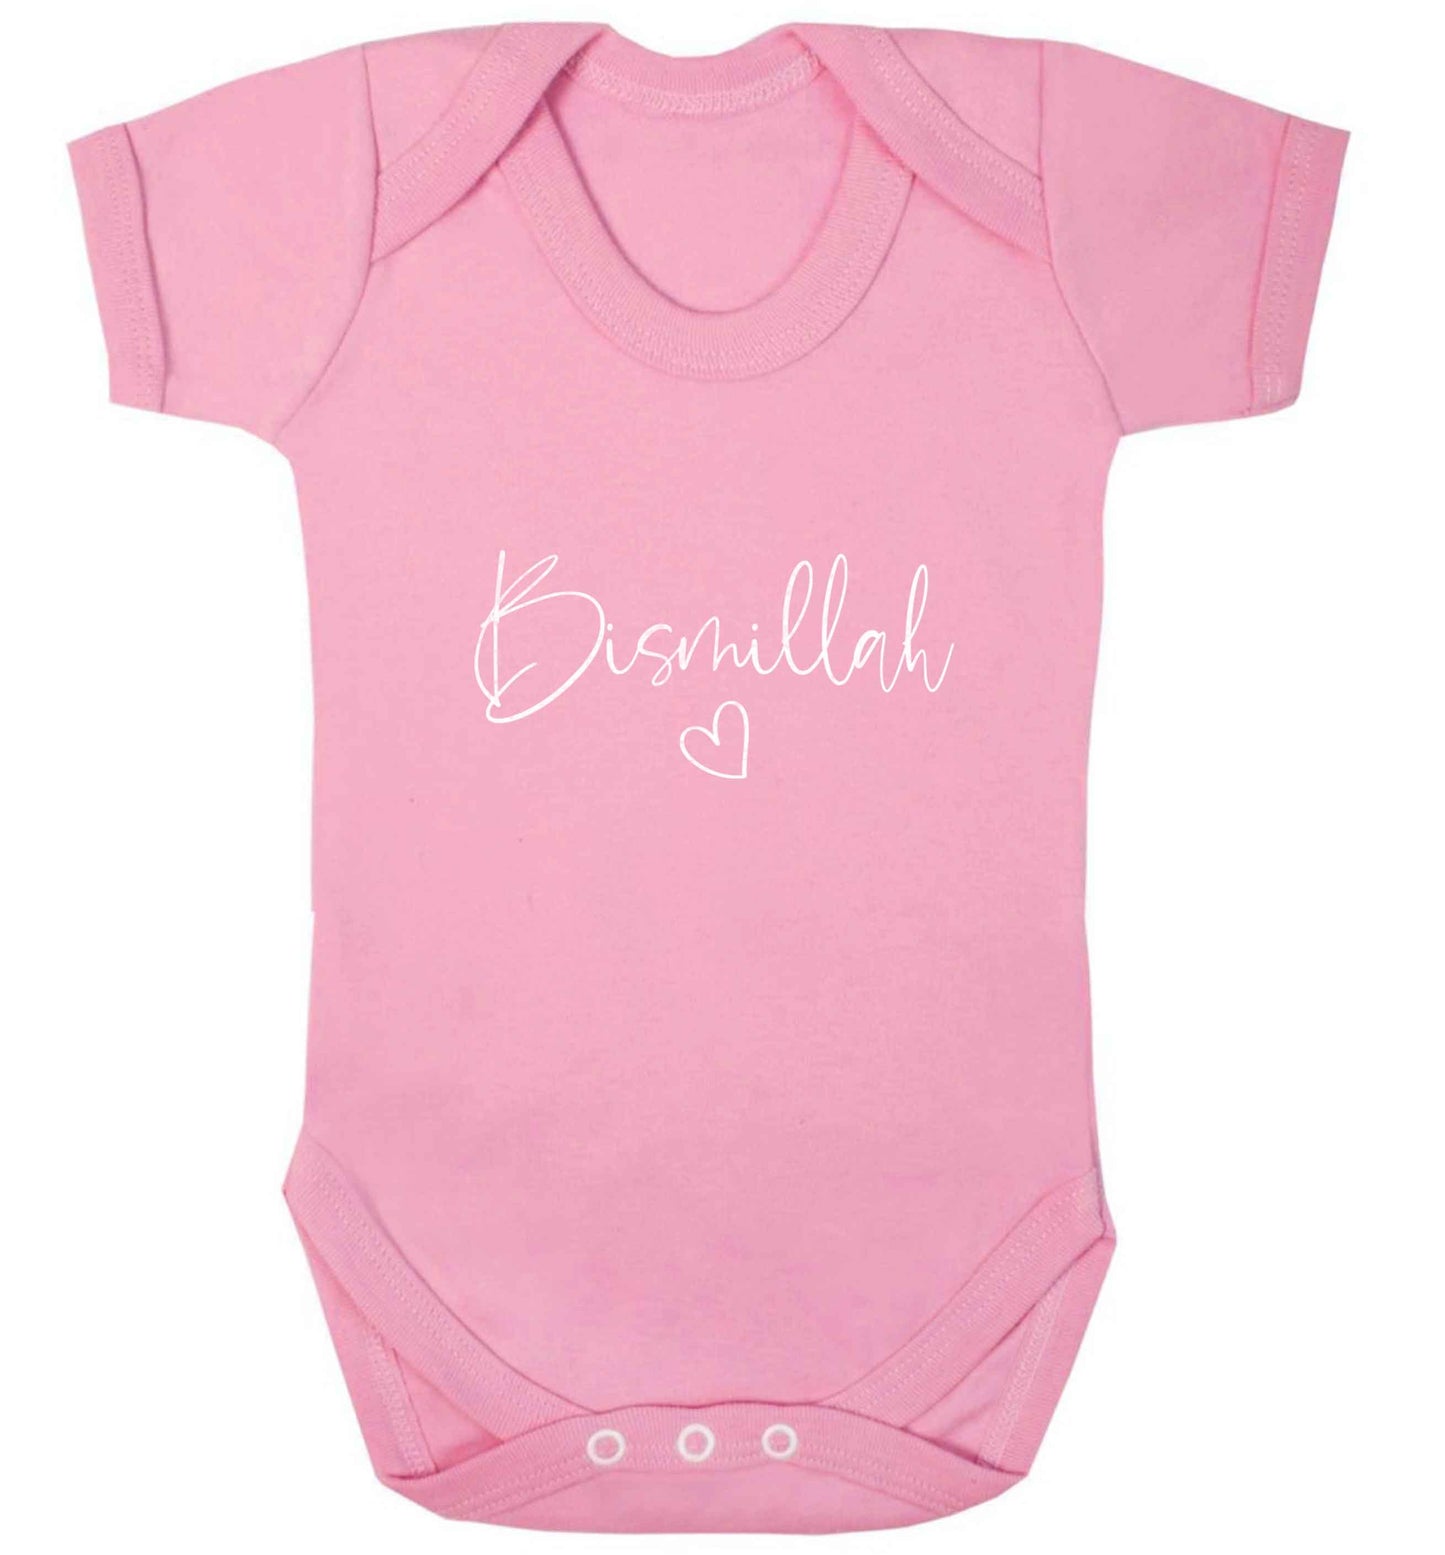 Bismillah baby vest pale pink 18-24 months